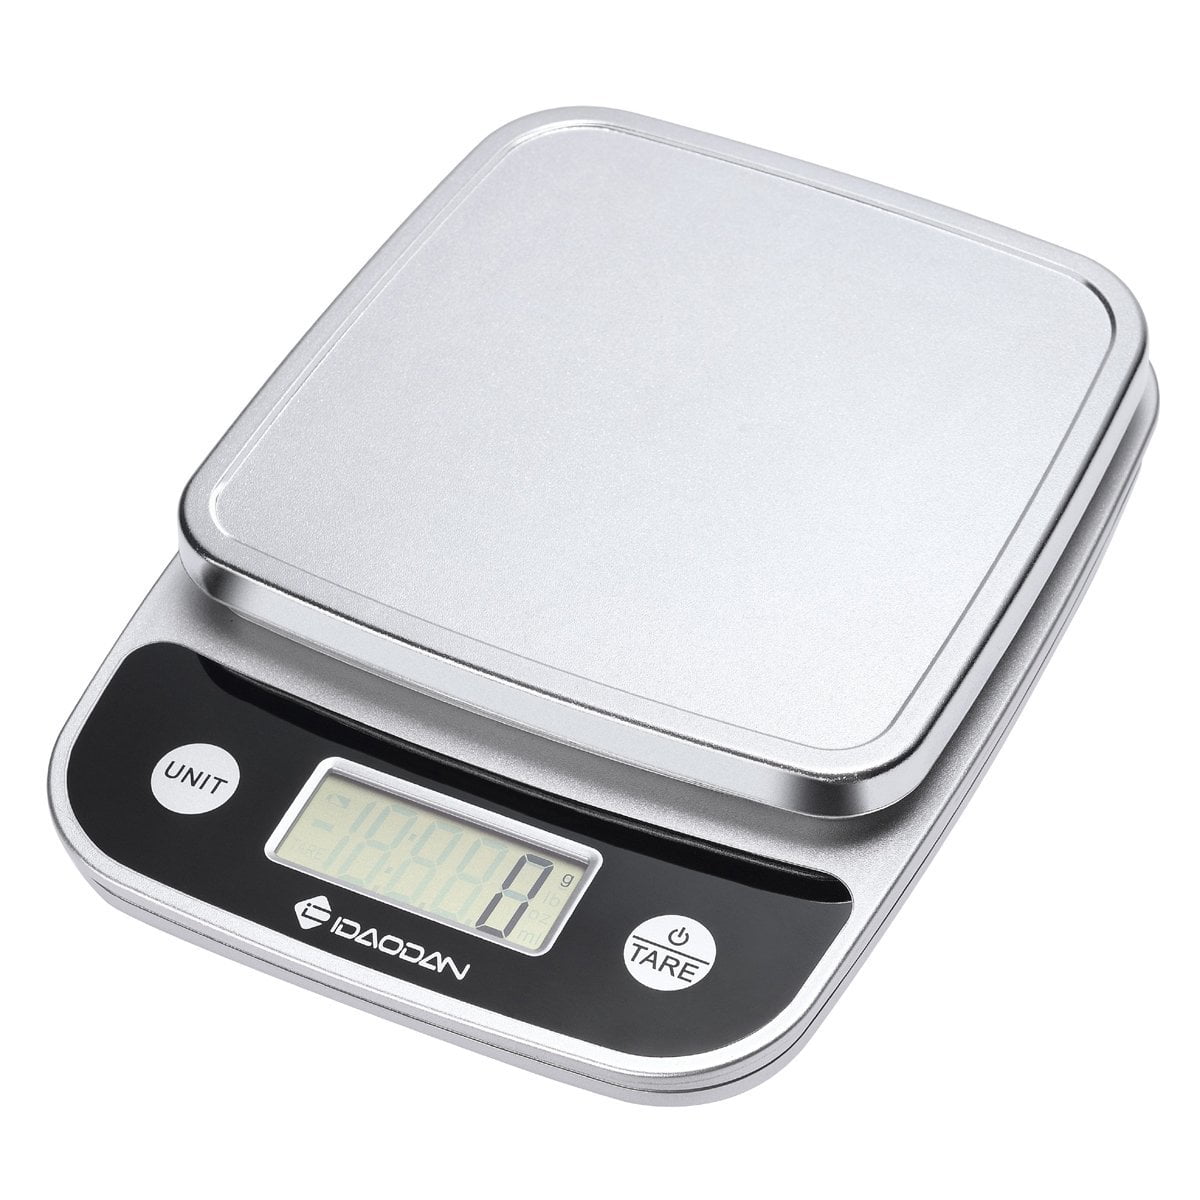 digital-food-scale-5000g-1g-idaodan-versatile-kitchen-scales